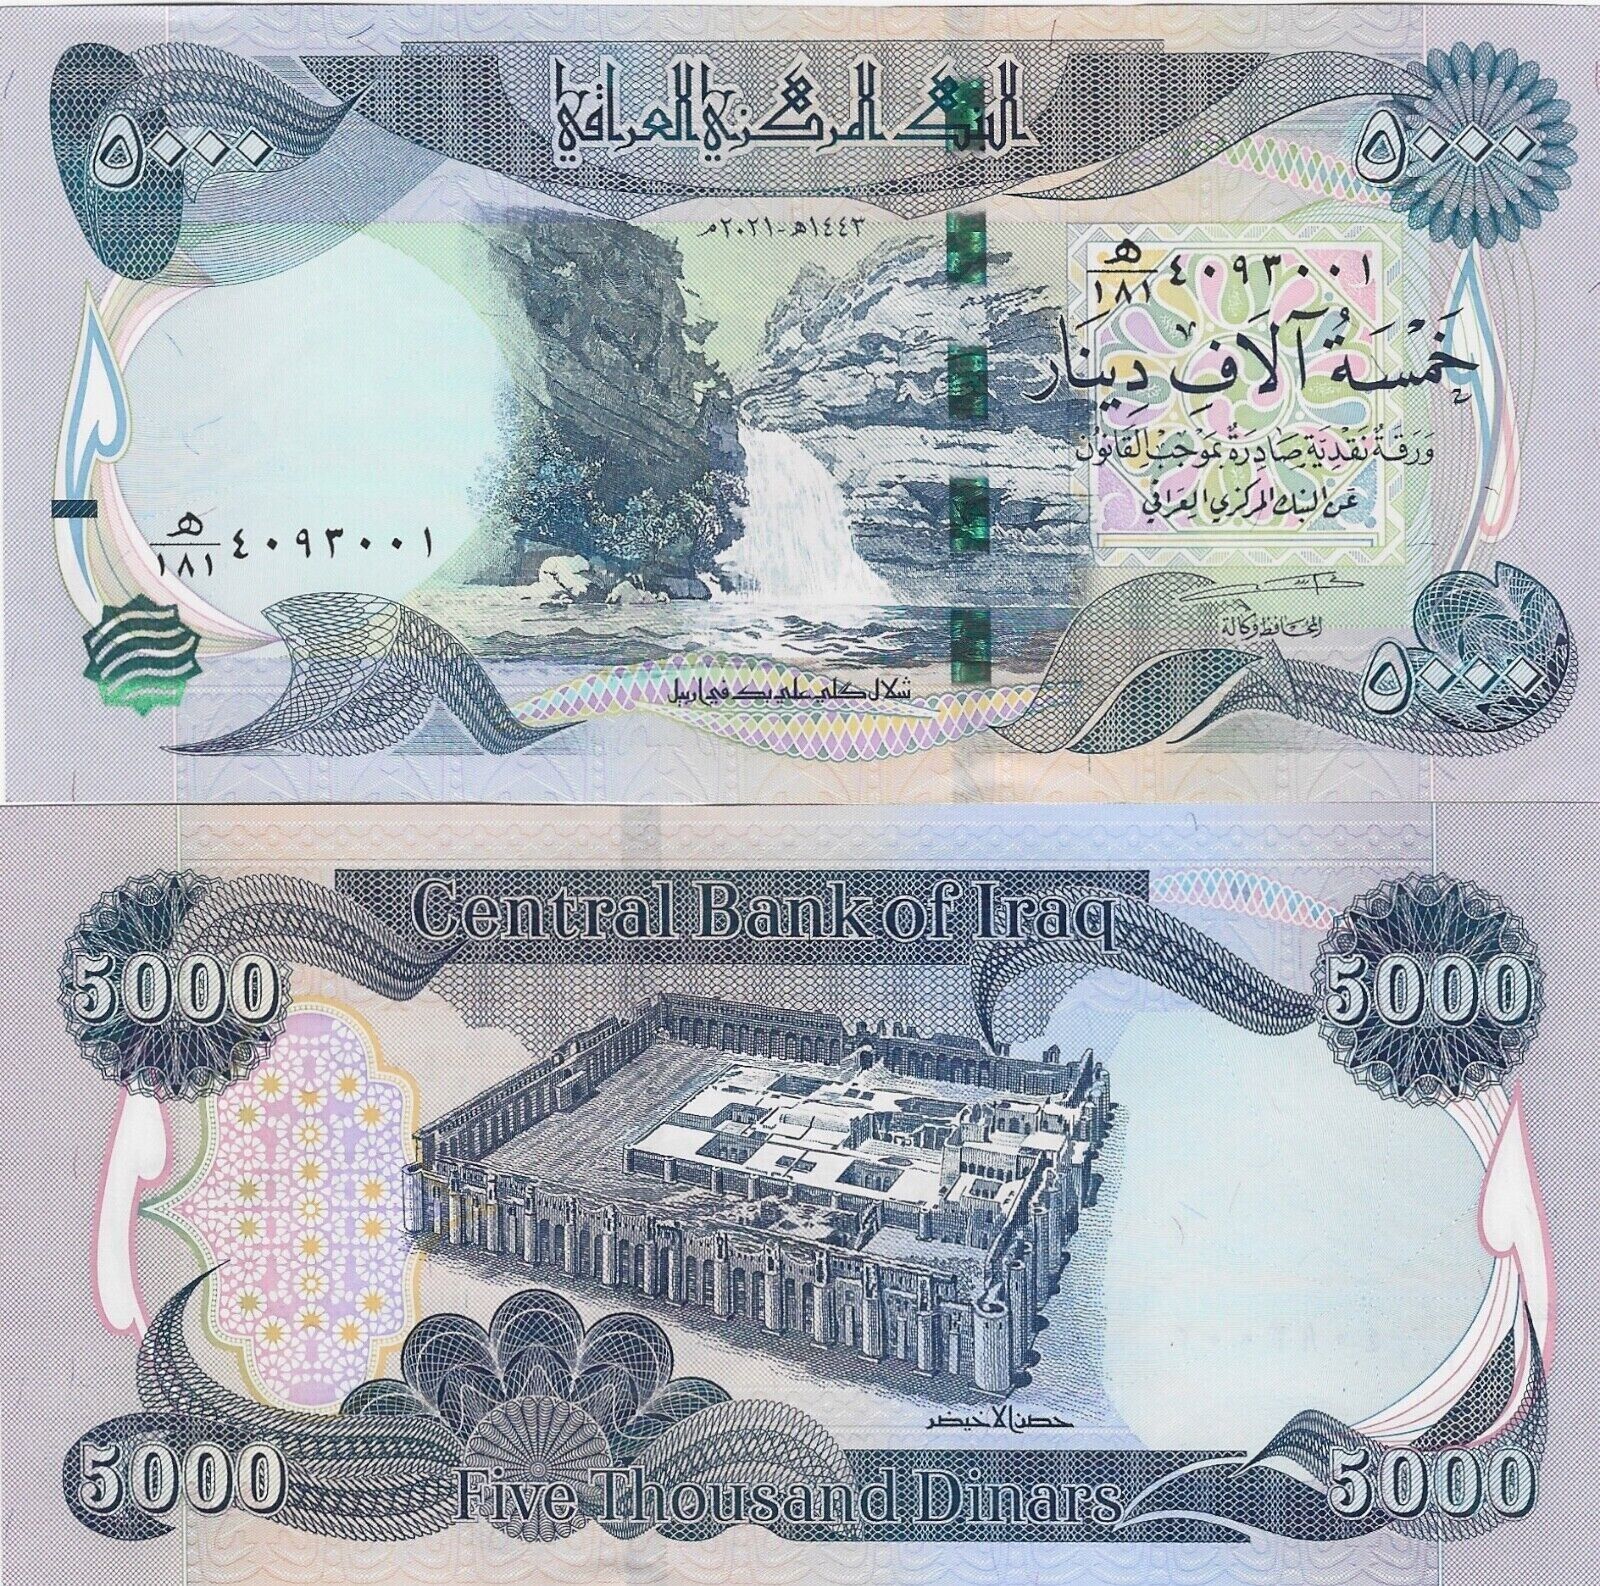 100,000 IRAQI DINAR - 20 x 5,000 IQD BANKNOTES (2021) - ACTIVE & AUTHENTIC